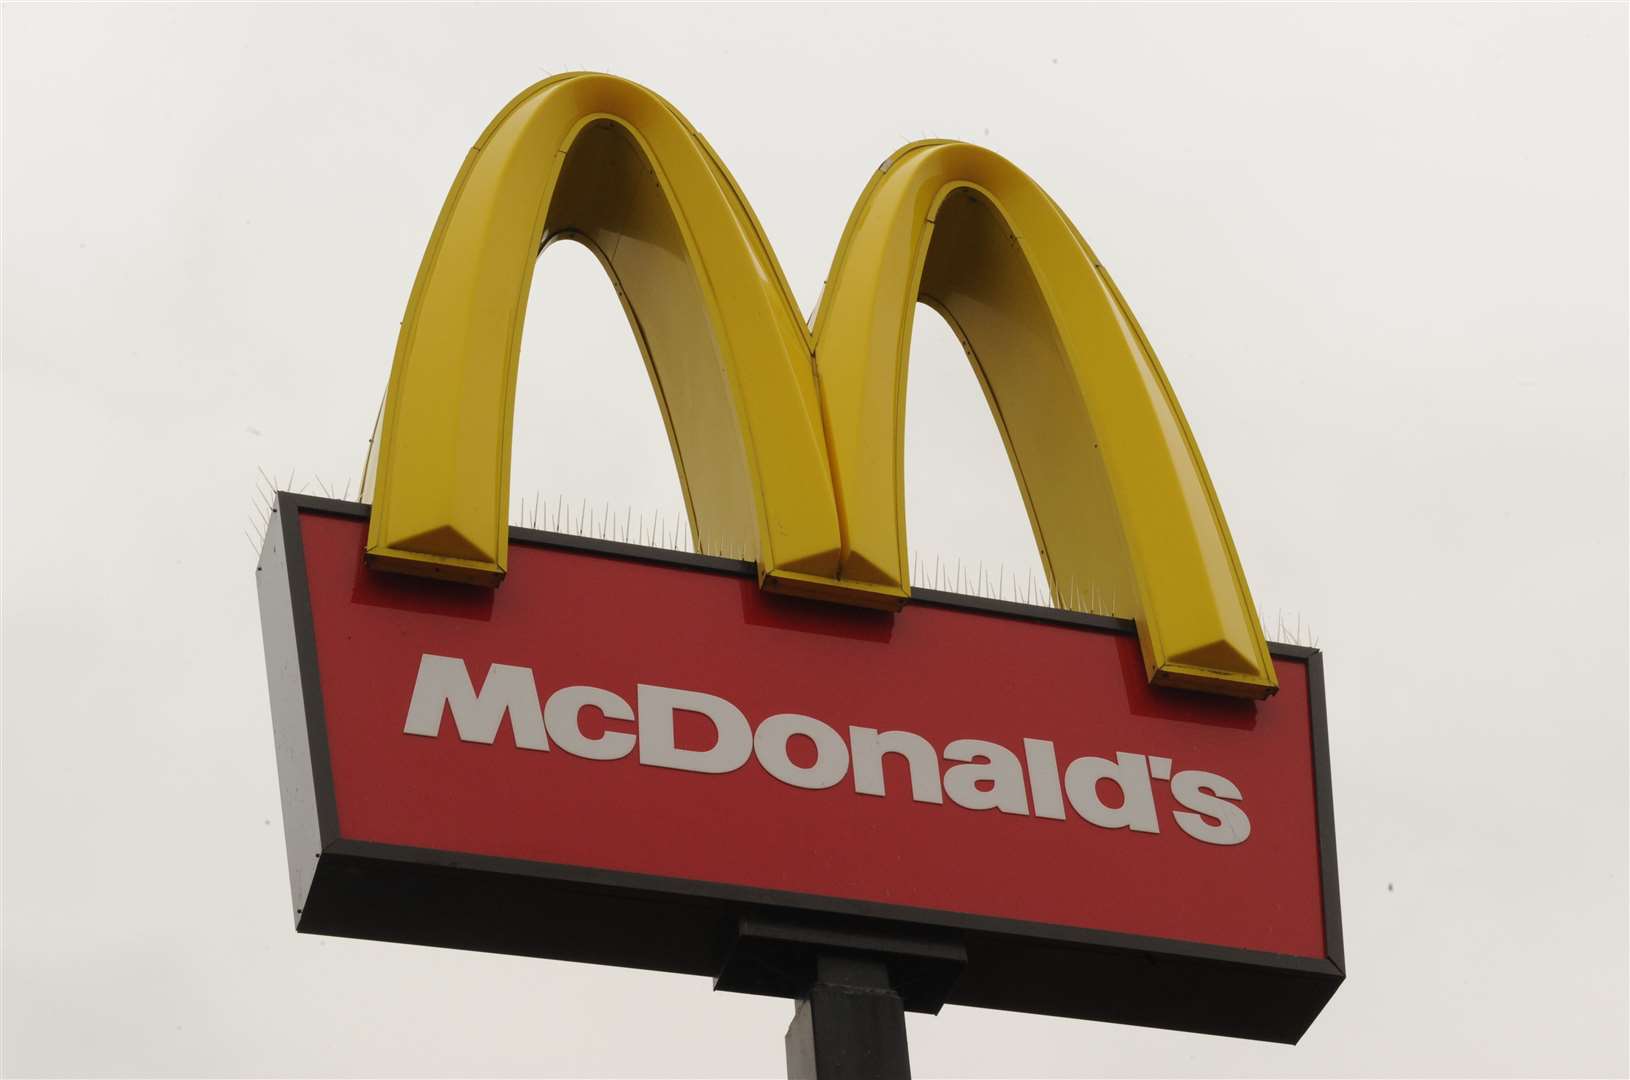 A McDonald's drive-thru restaurant is under construction in Snodland